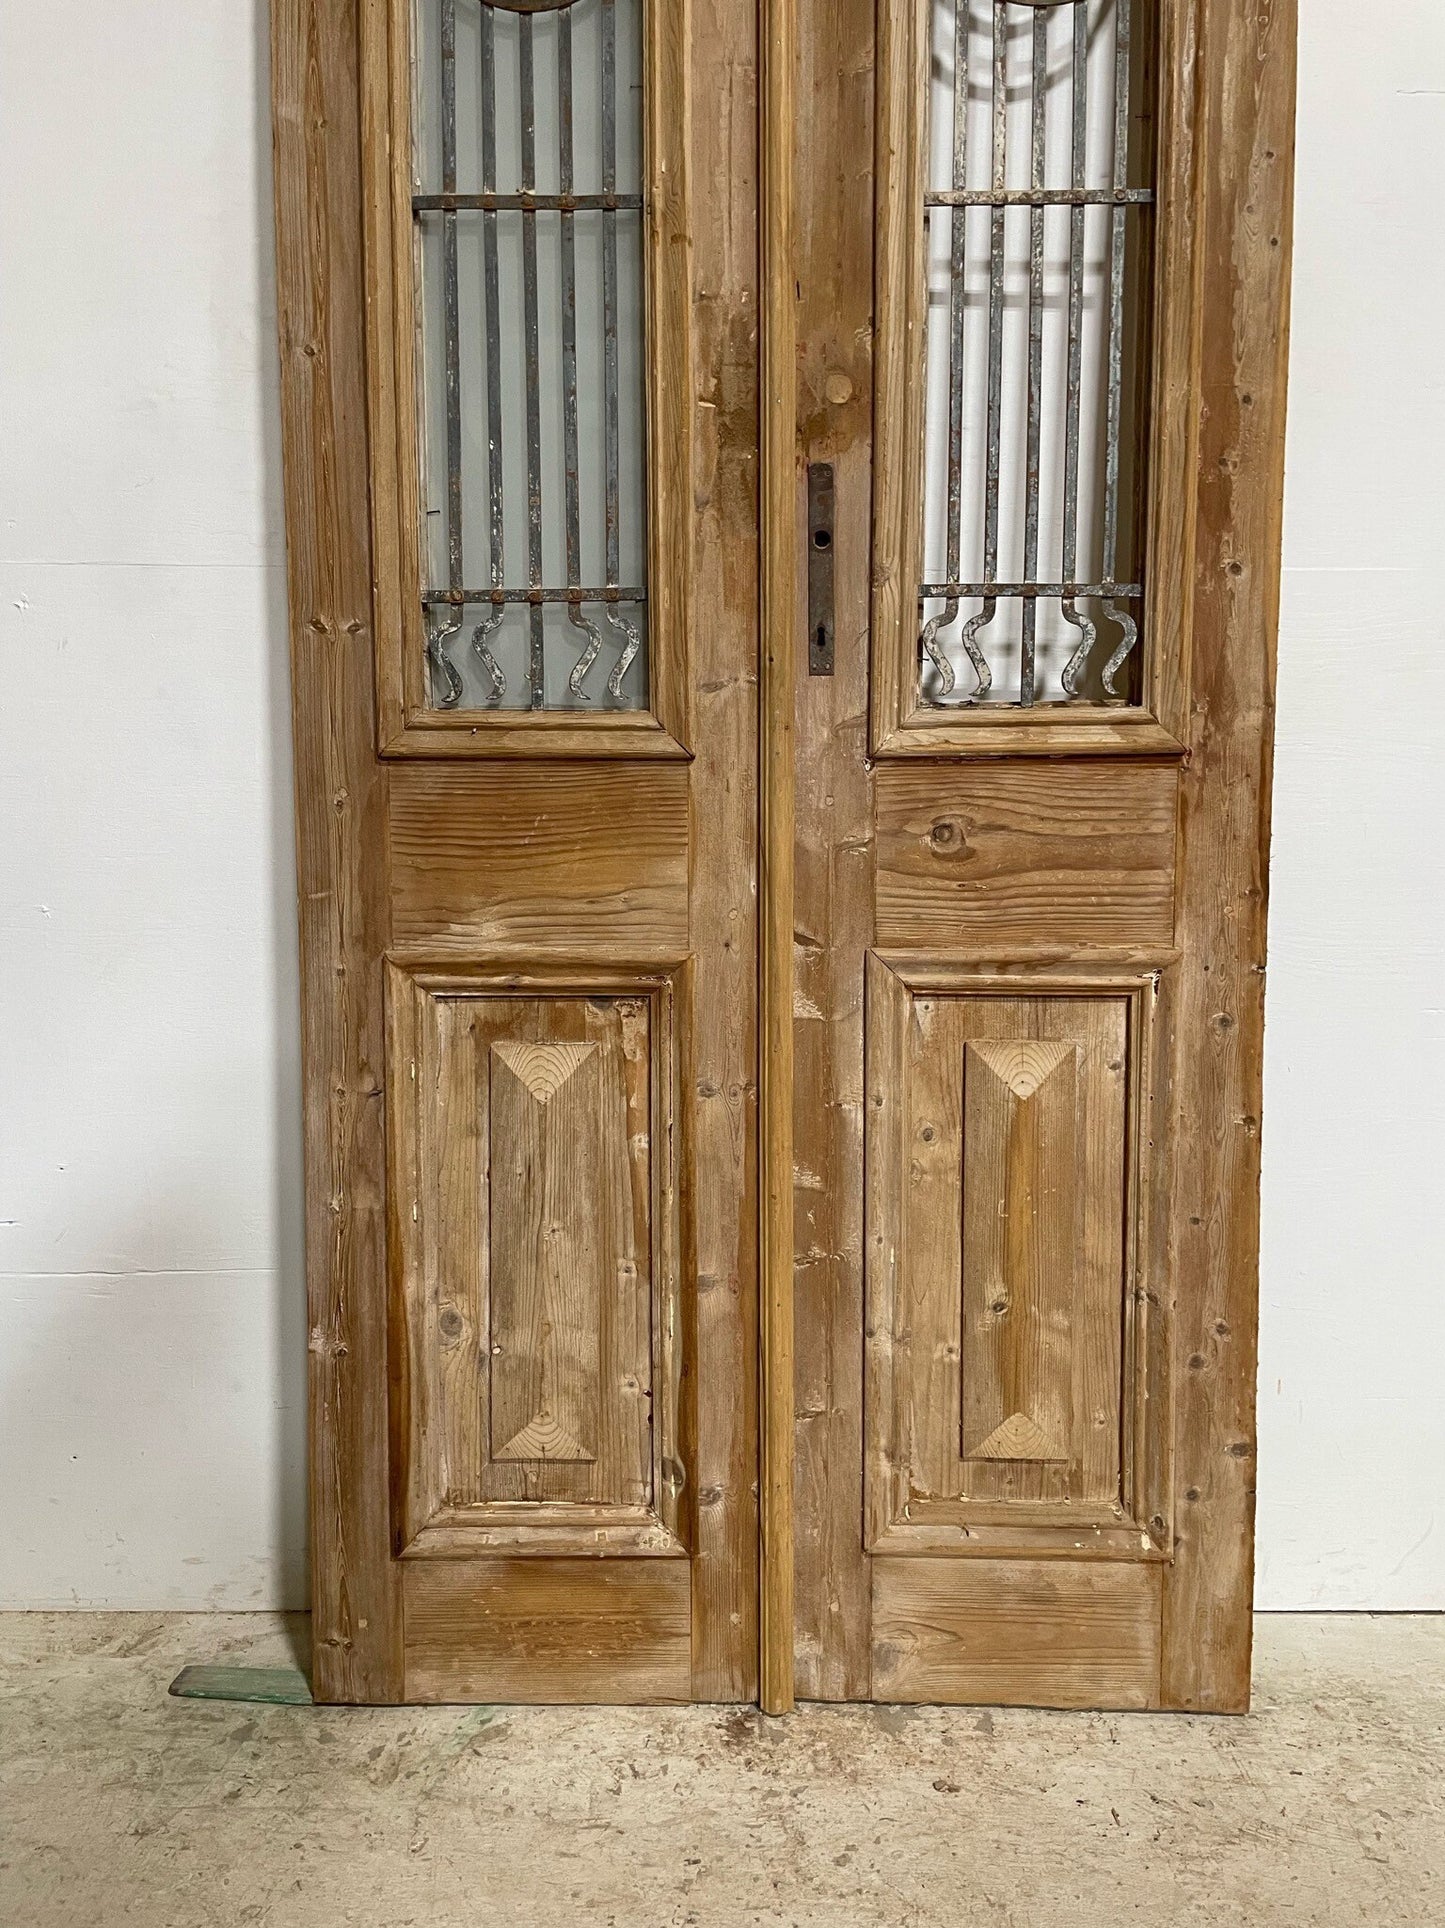 Antique French door (95x39.75) with metal F0908